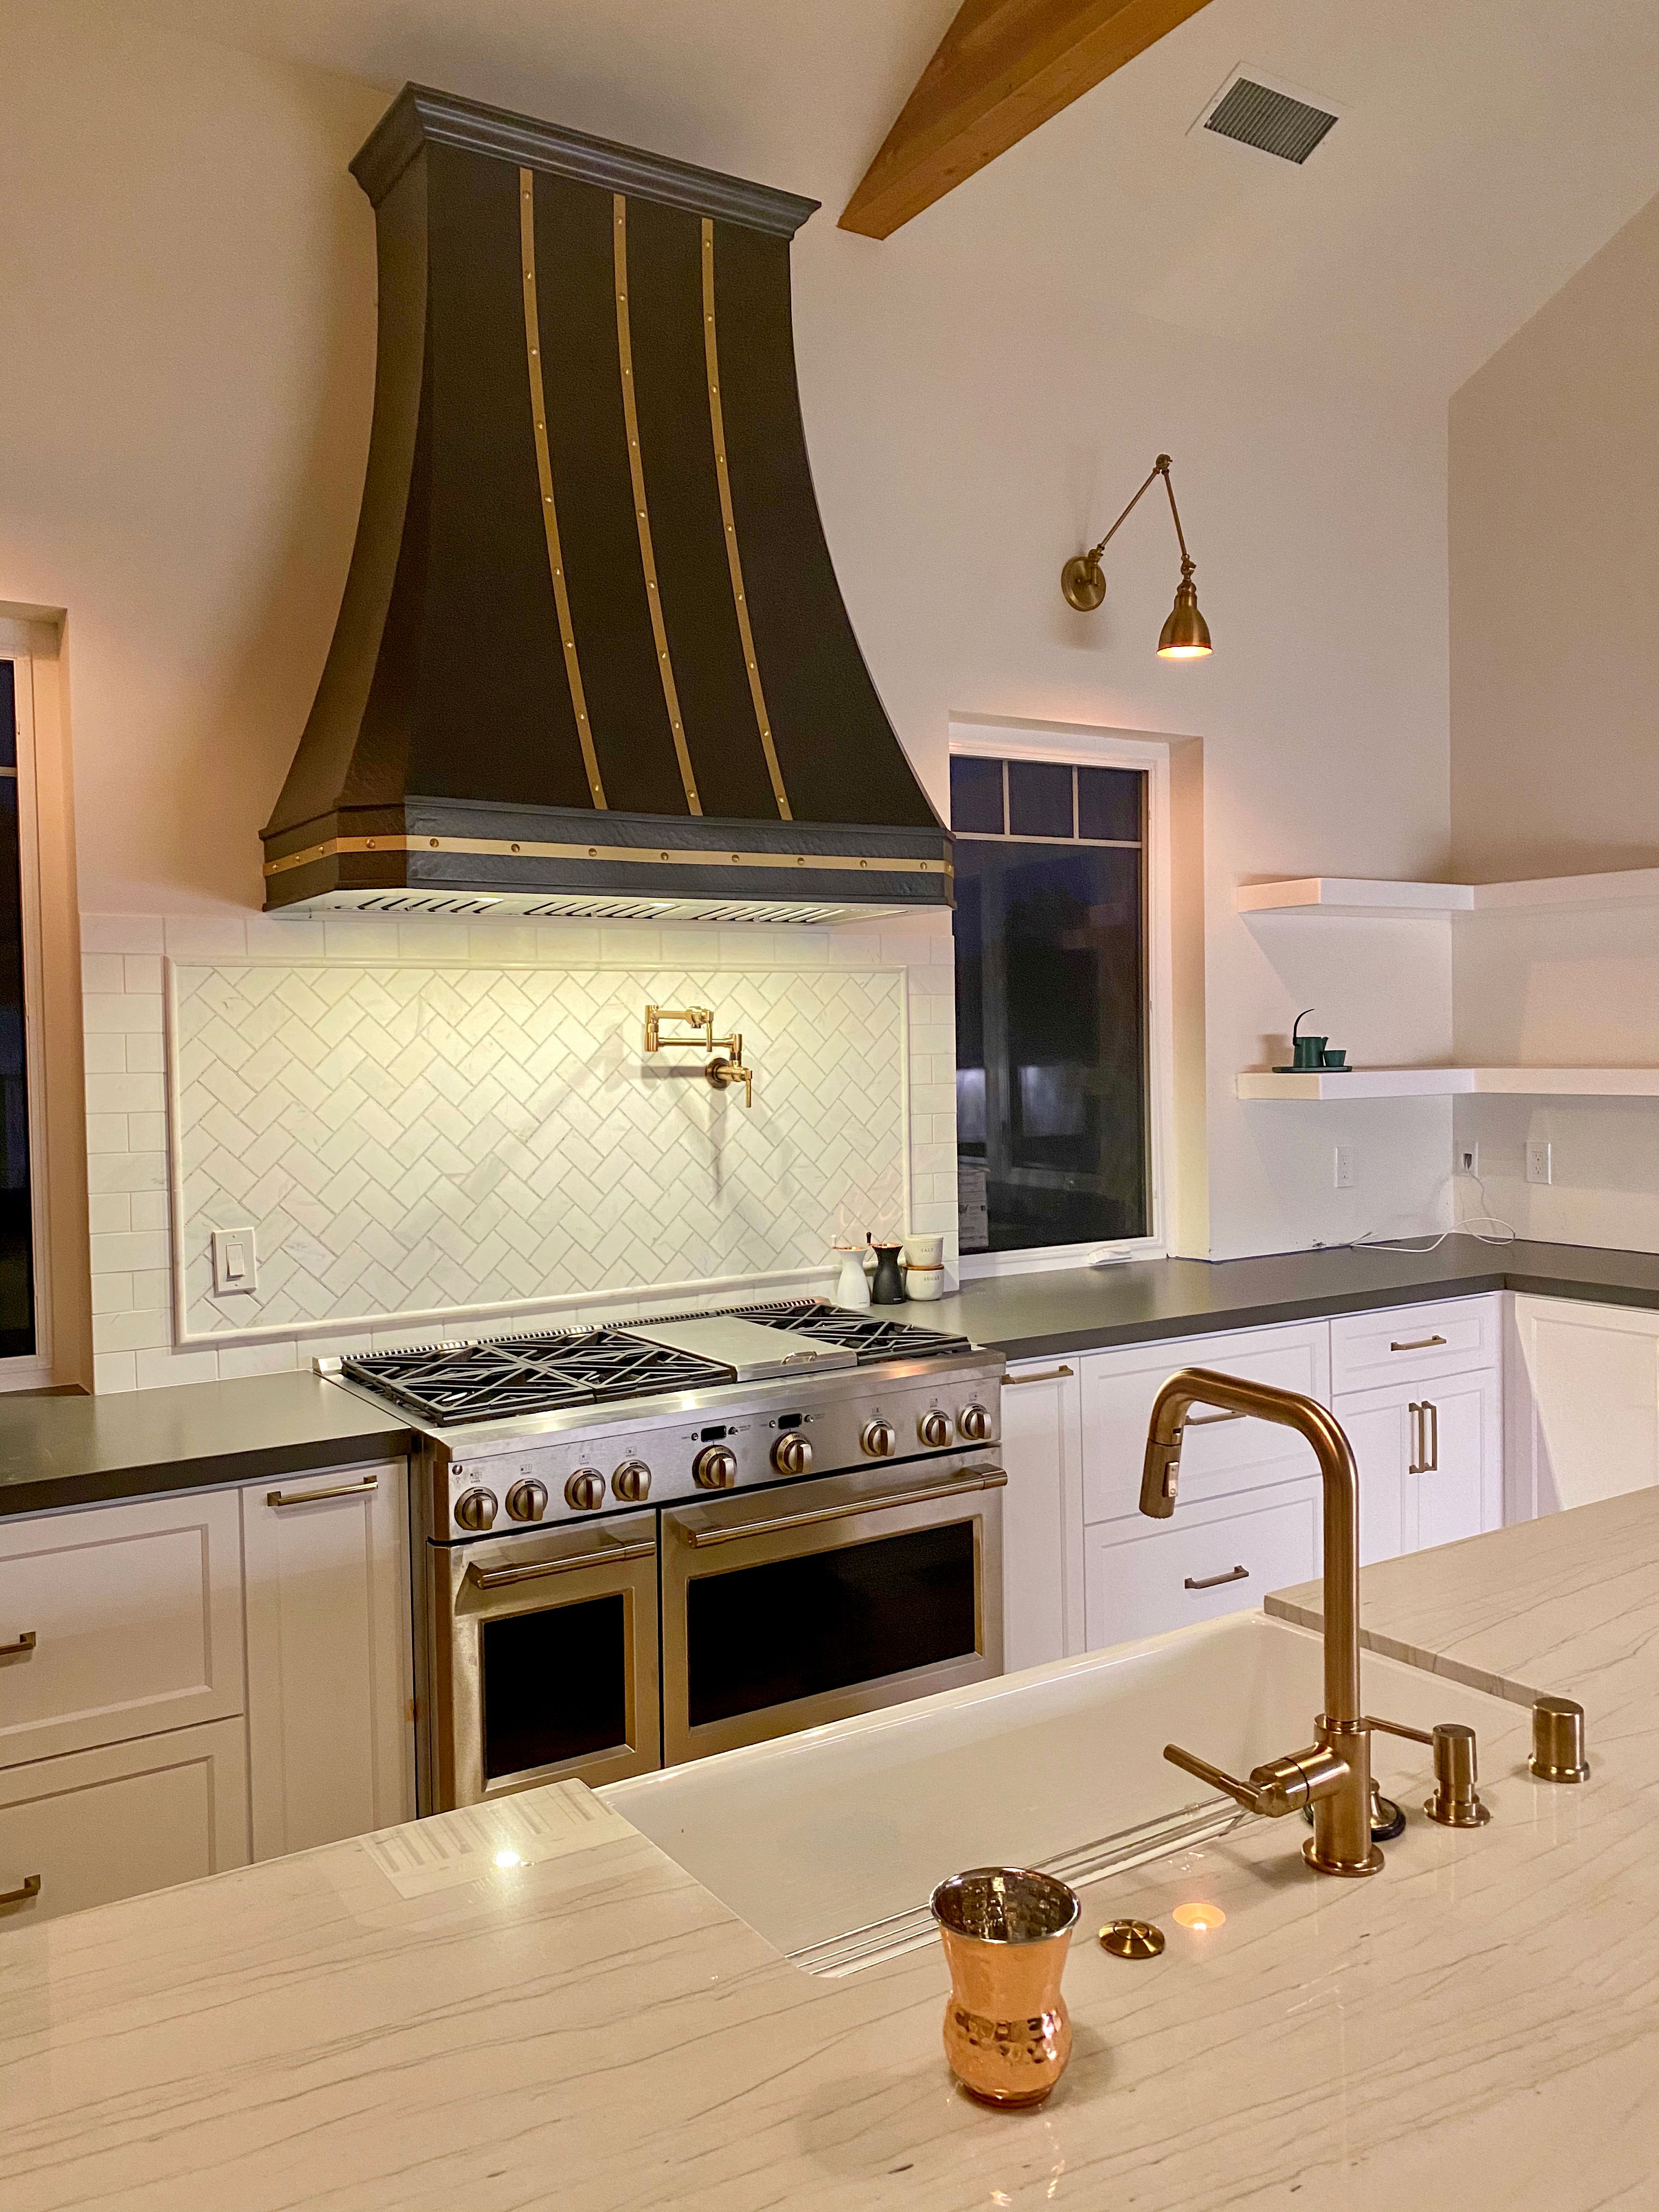 Embark with french kitchen design idea, featuring white cabinets, sleek grey kitchen countertops, captivating brick backsplash with range hood